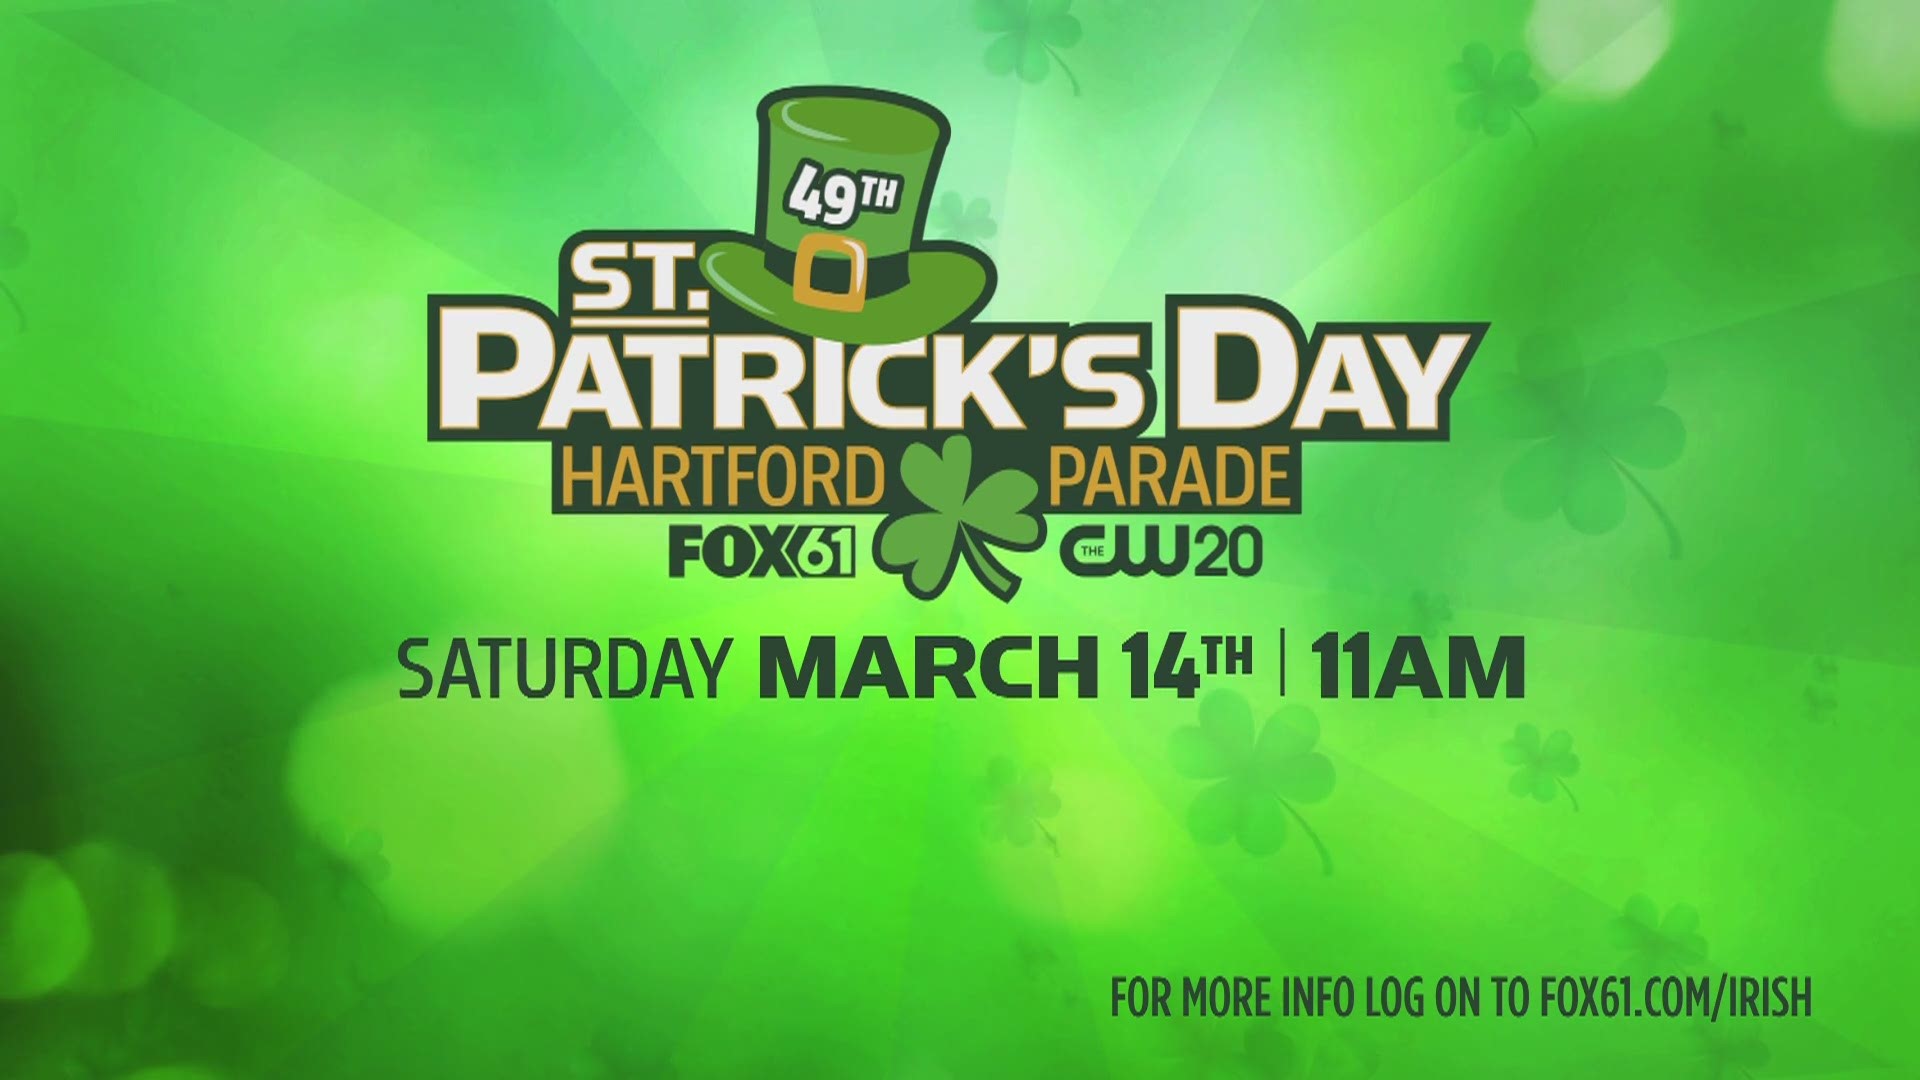 Celebrate at this year's Hartford St. Patrick's Day Parade!